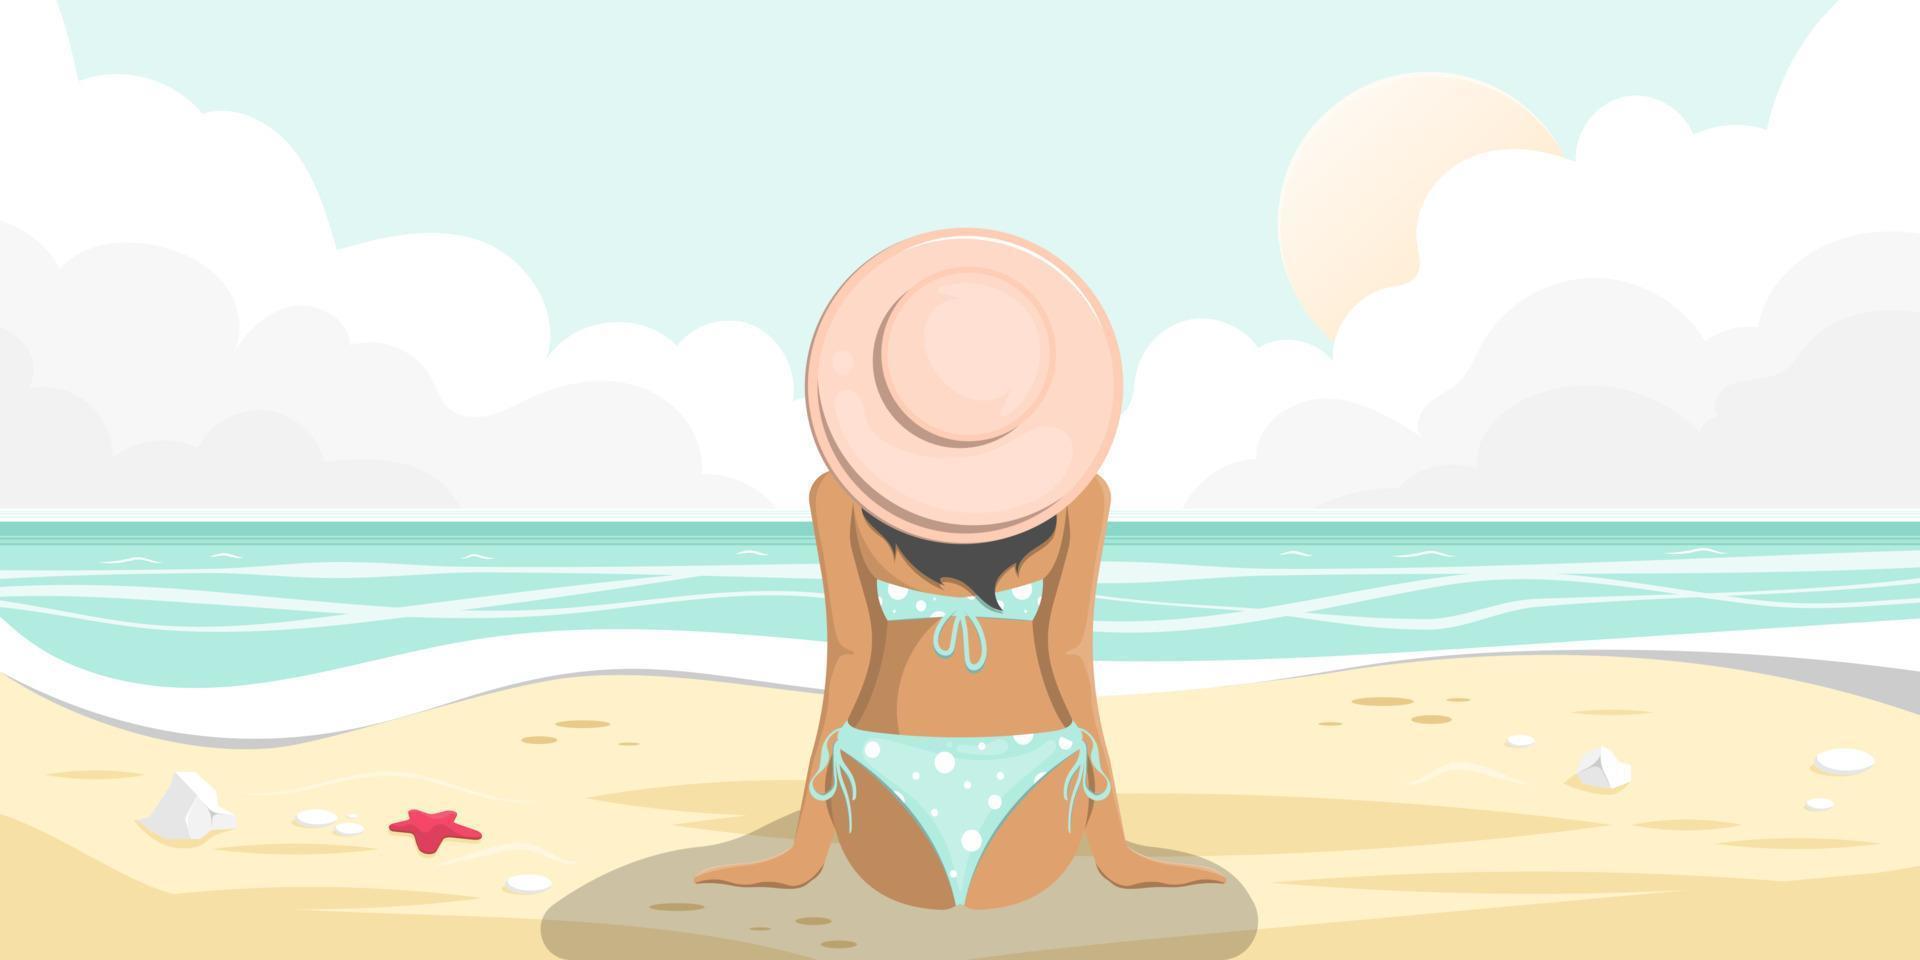 Beach cartoon scene, woman sitting on sand beach with calm sea view, Vector illustration.